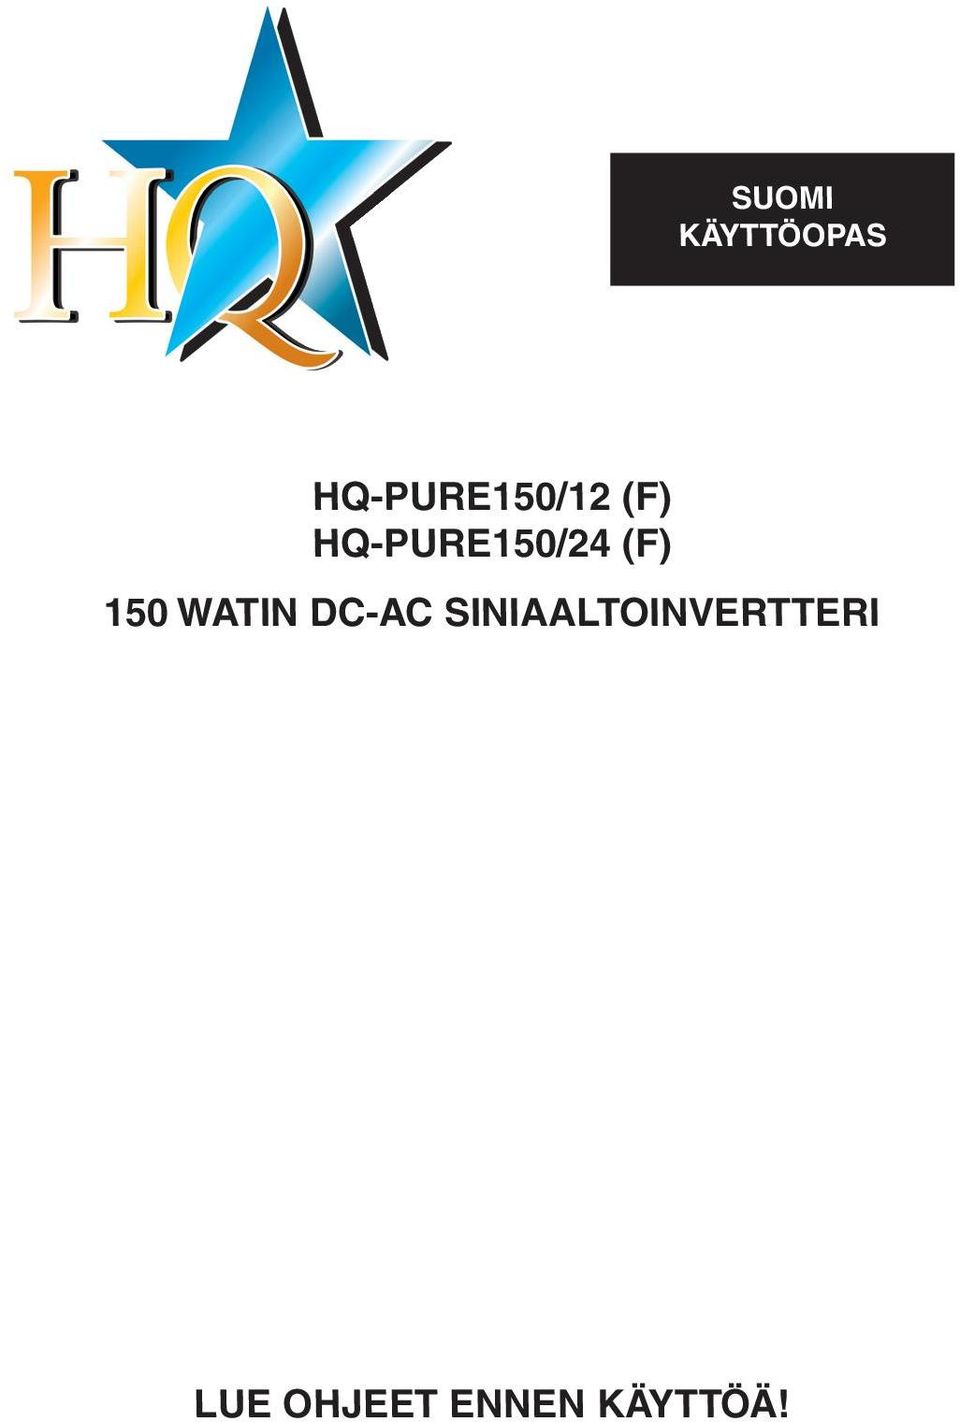 HQ-PURE150/24 (F) 150 WATIN